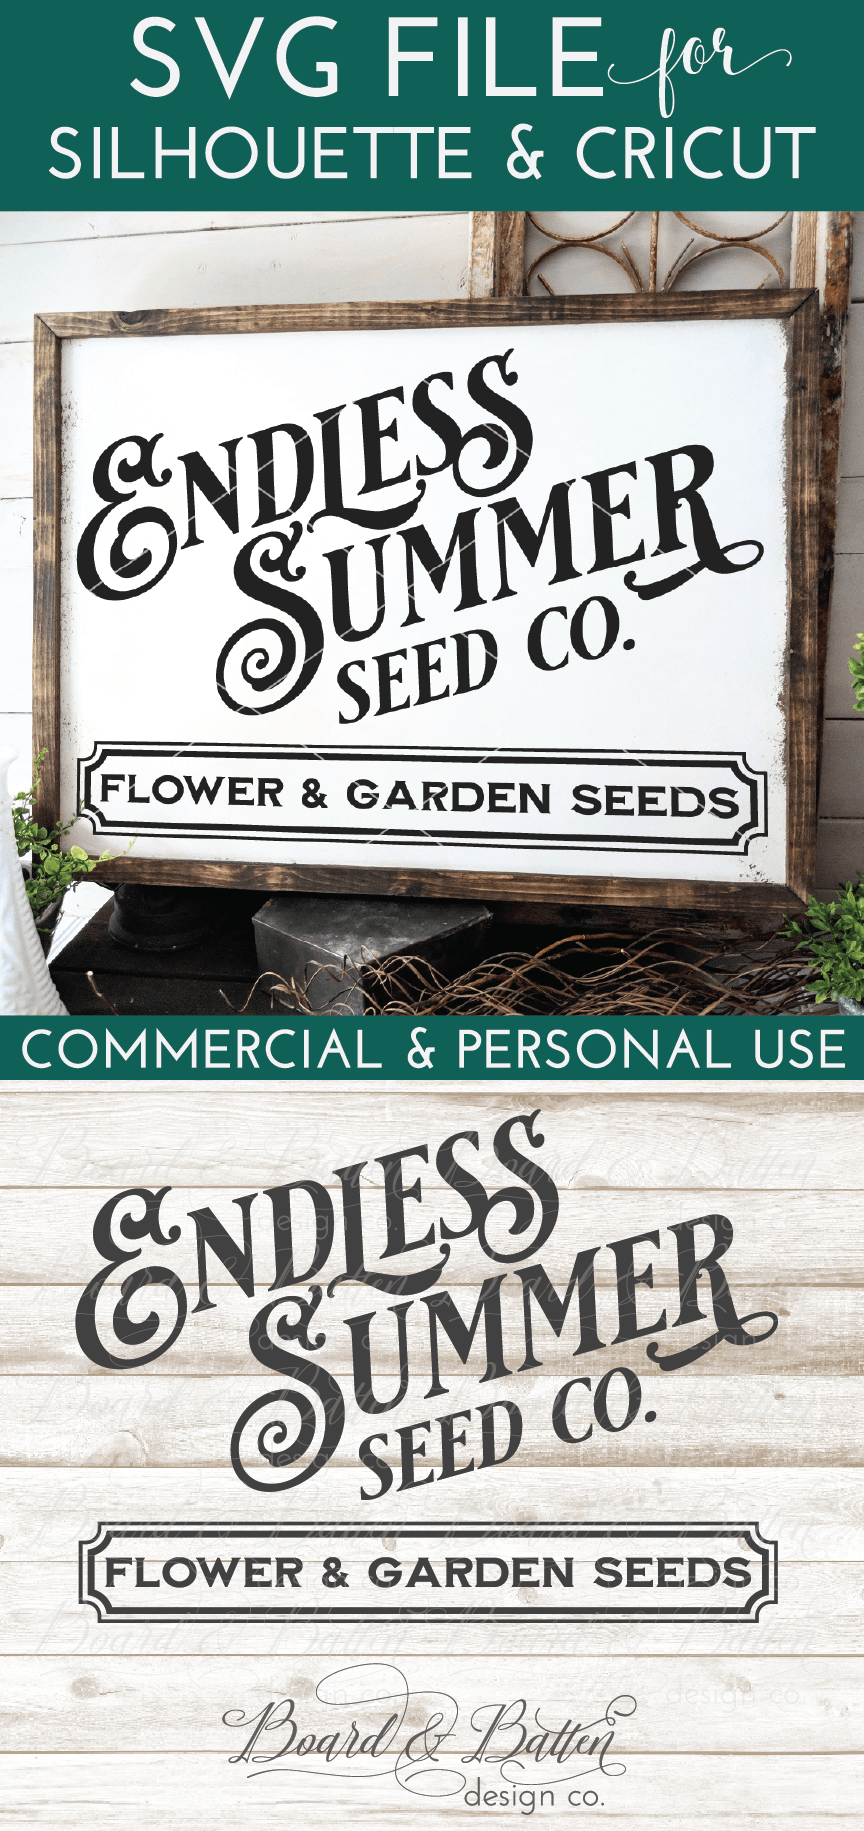 Download Endless Summer Seed Company SVG File for Gardeners - Board & Batten Design Co.